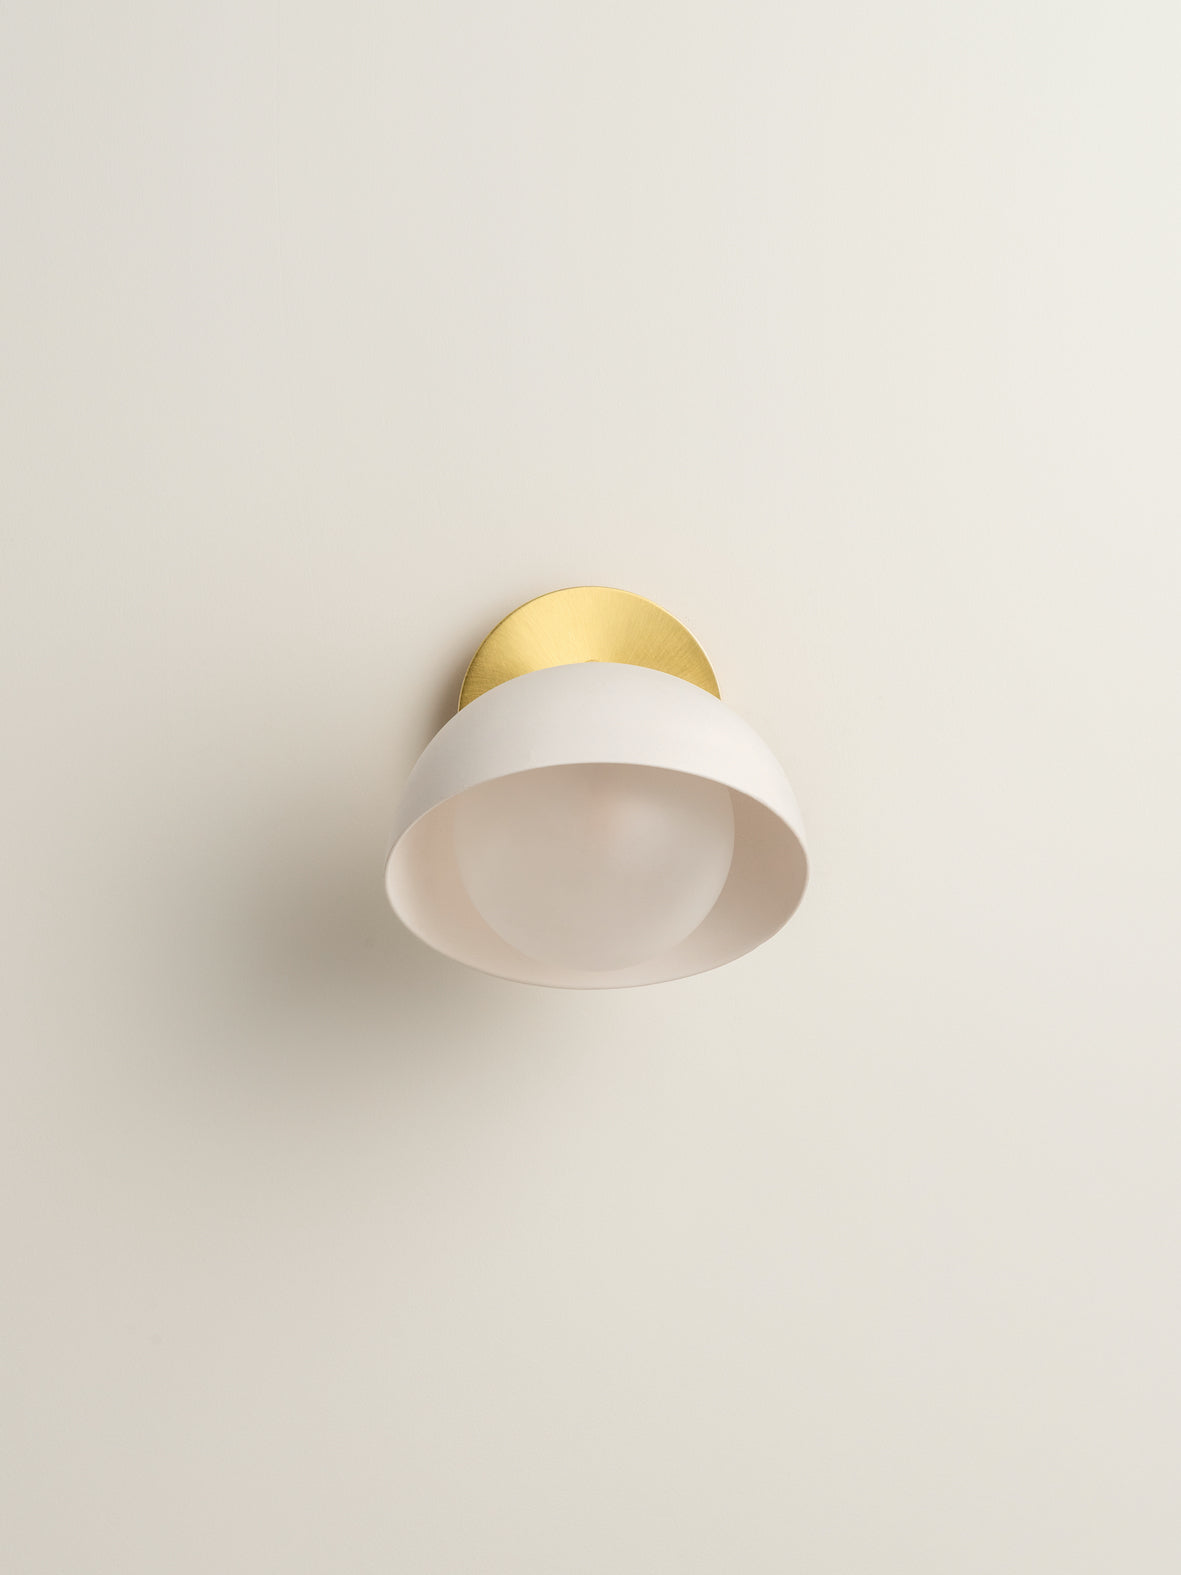 Porsa - 1 light brushed brass and warm white porcelain wall light | Wall Light | Lights & Lamps Inc | Modern Affordable Designer Lighting | USA